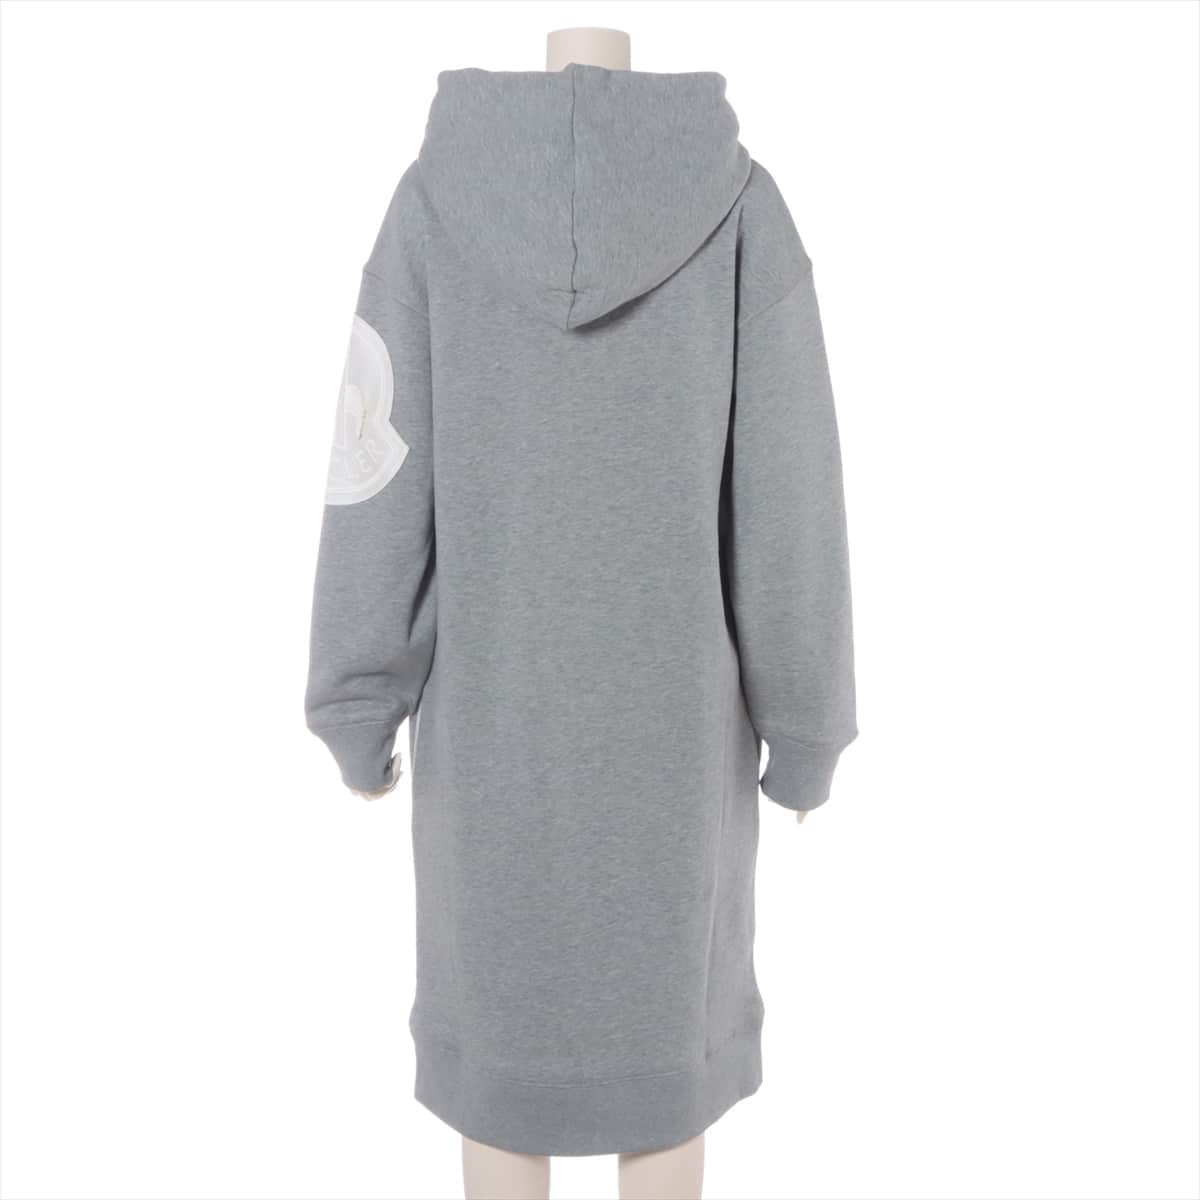 Moncler ABITO 20 years Cotton & nylon Dress M Ladies' Grey